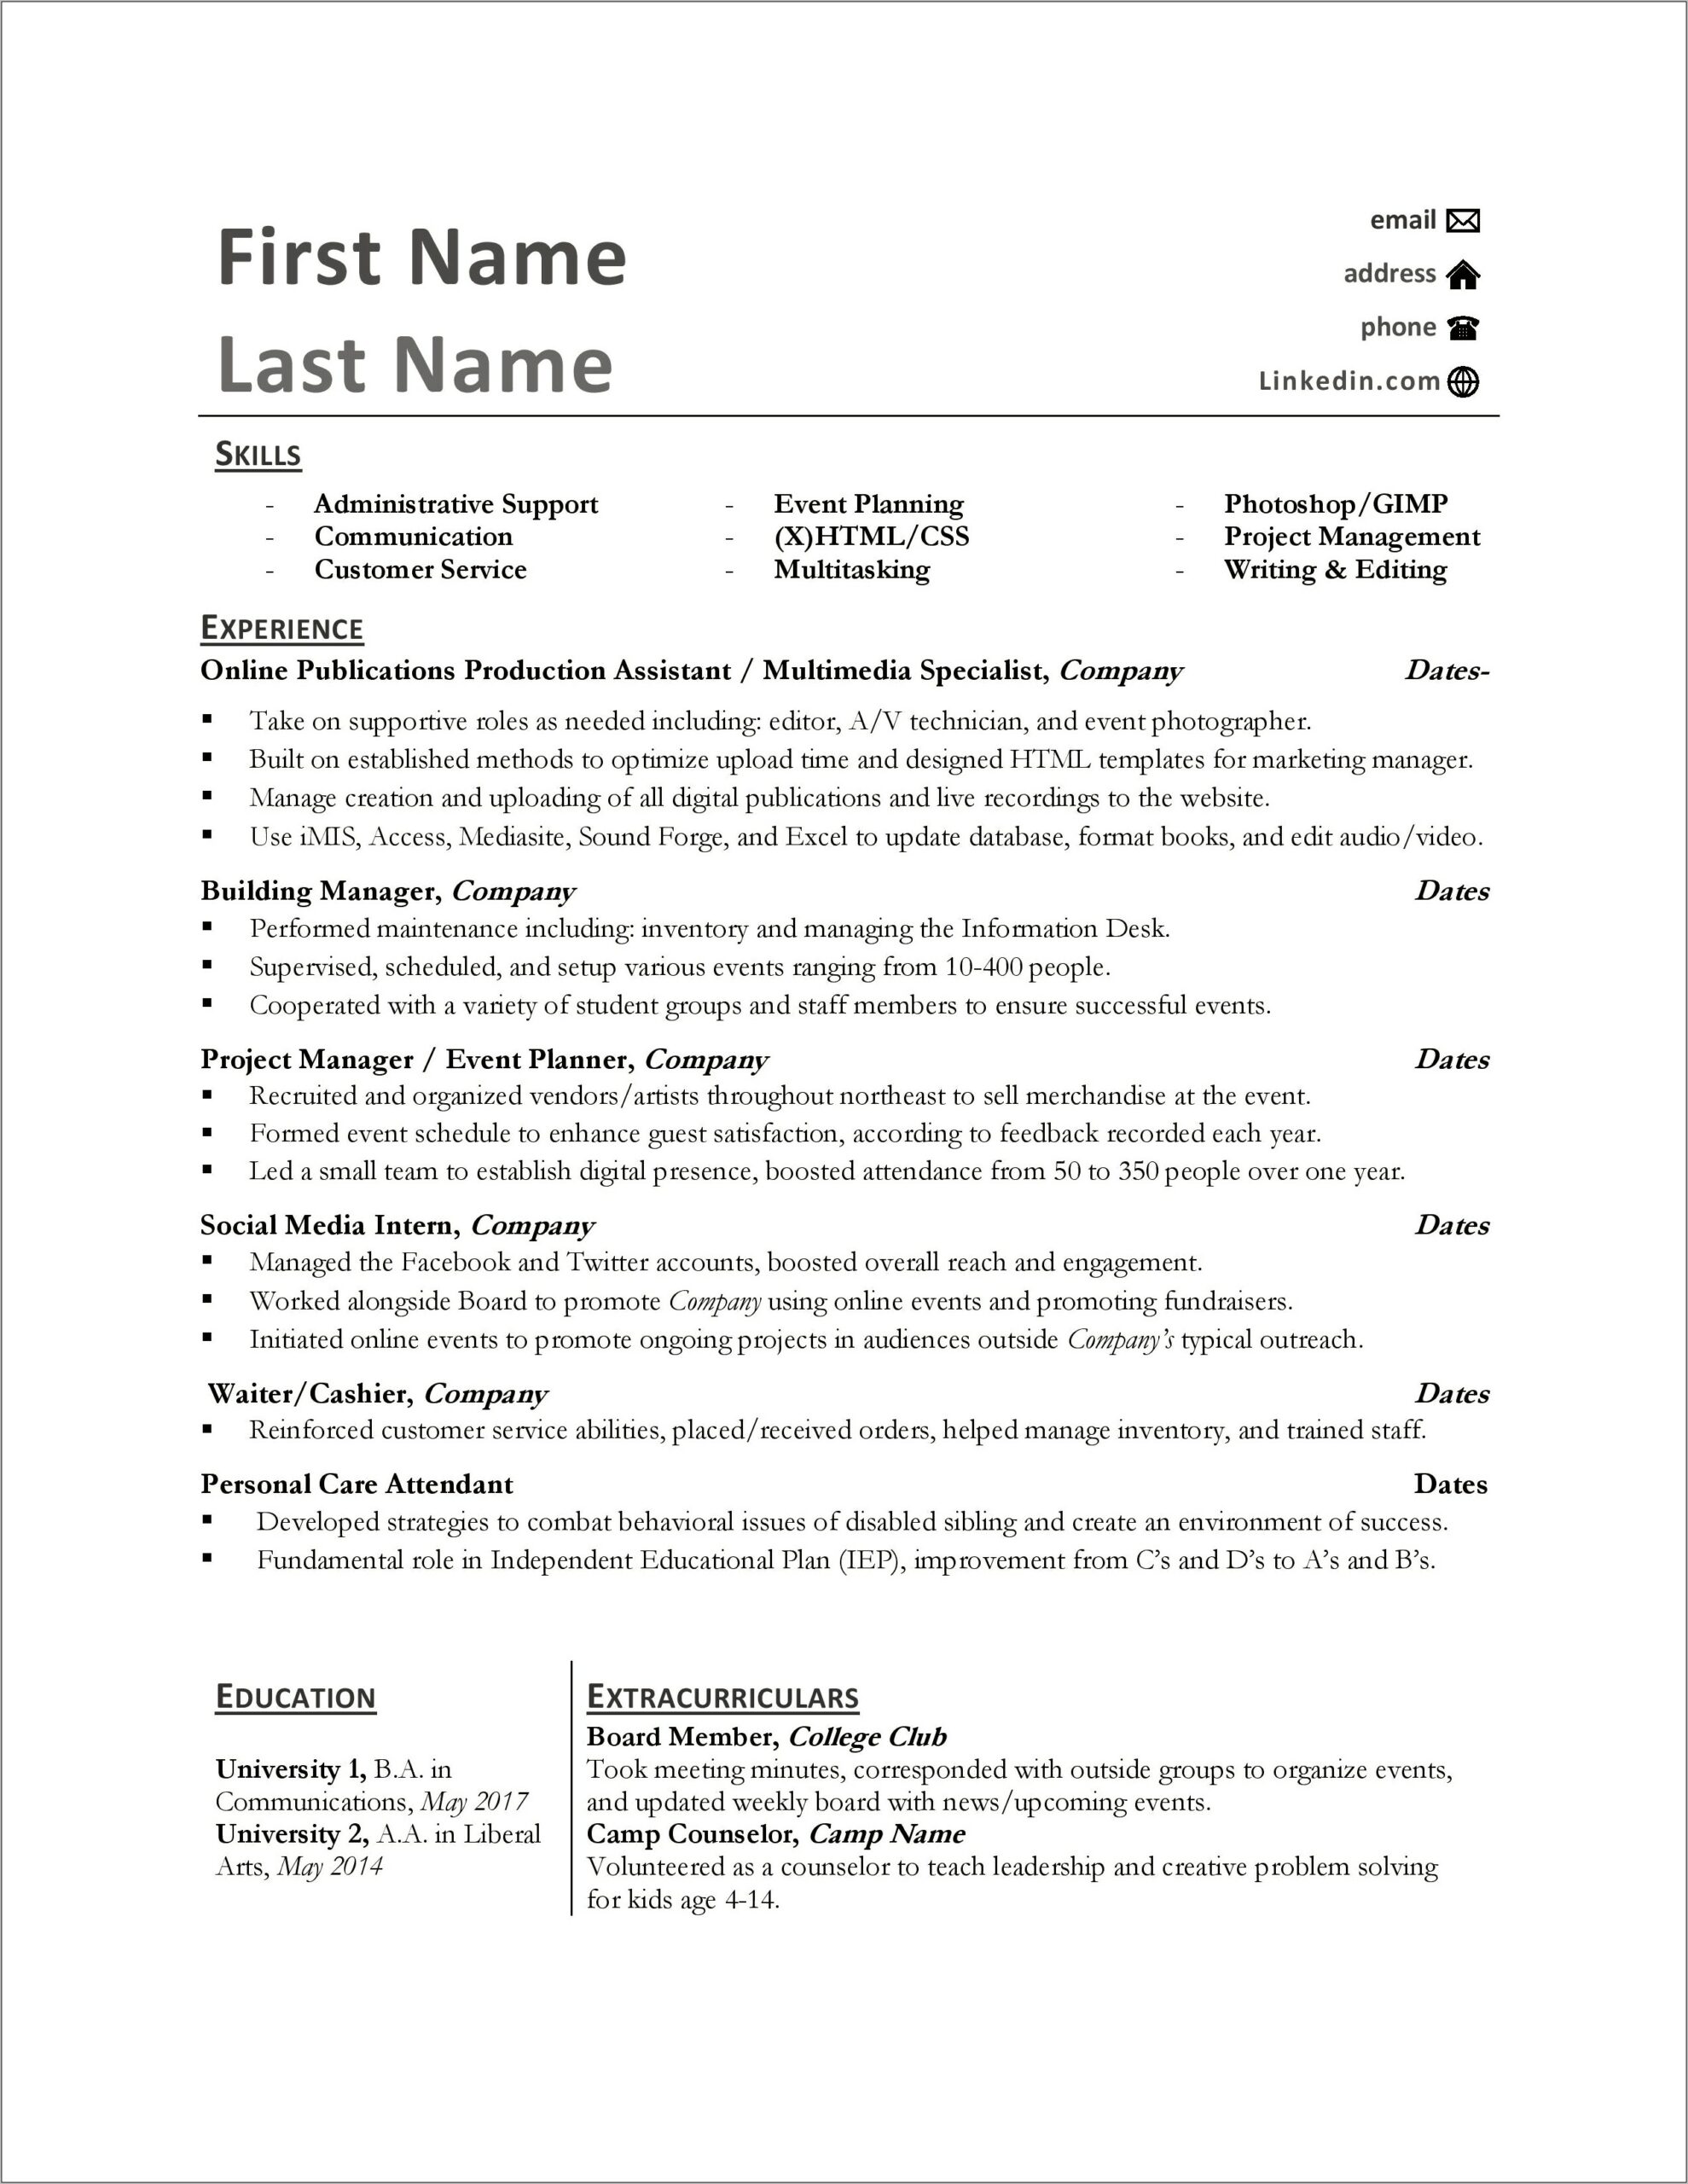 Resume One Job Multiple Locations